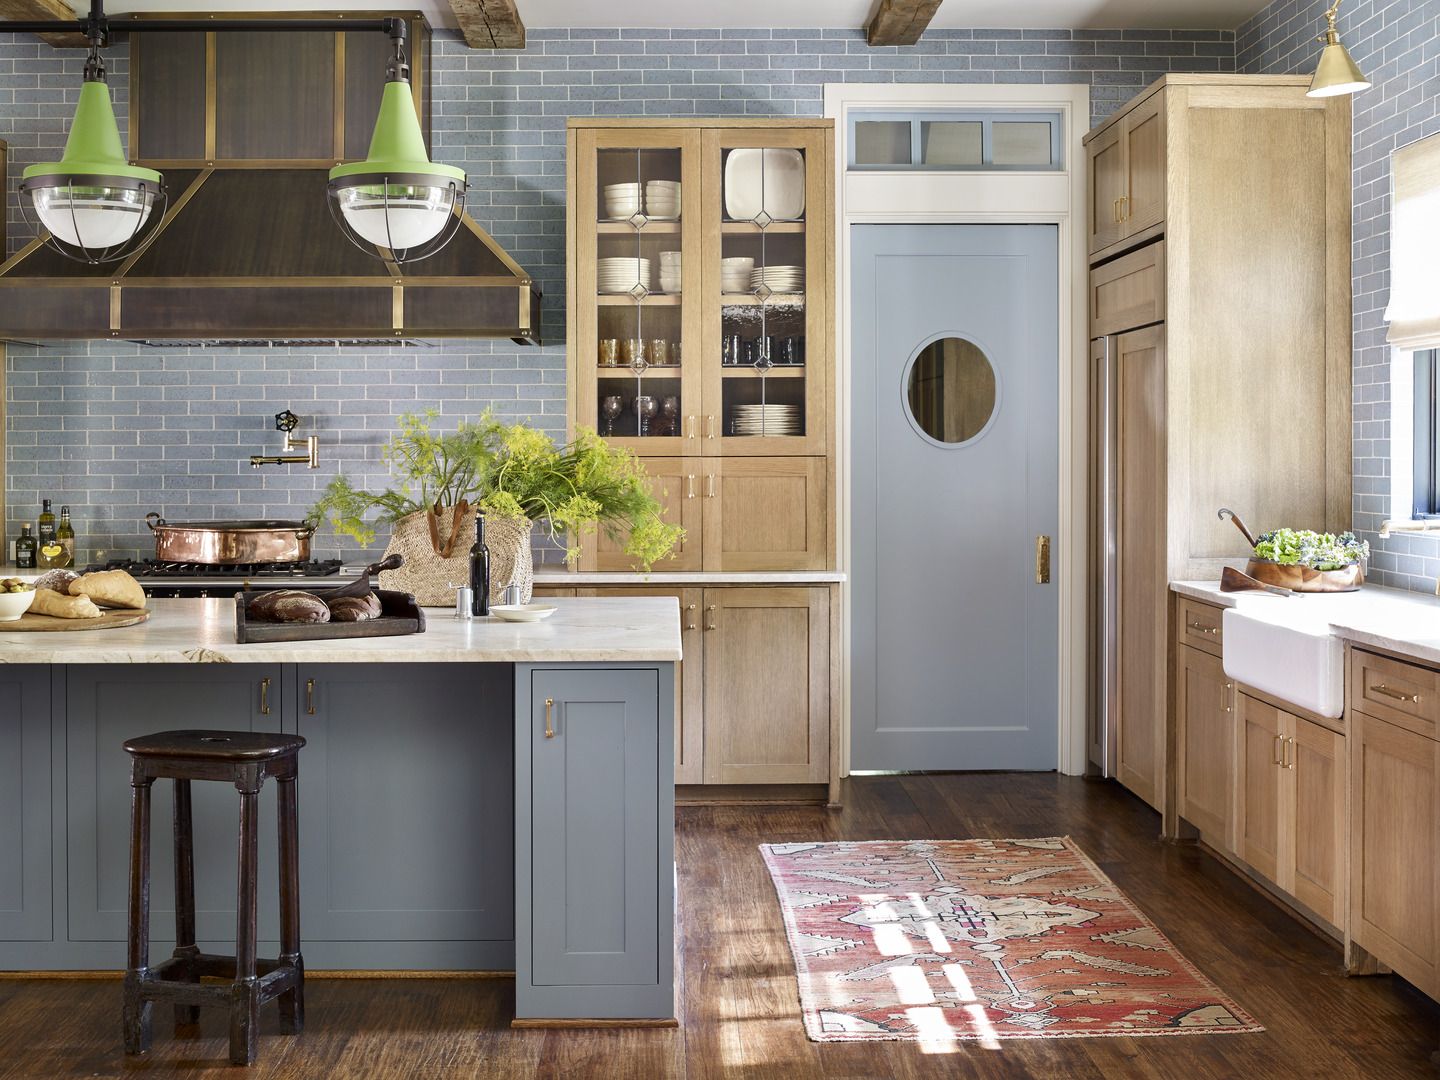 20 Best Kitchen Backsplash Ideas   Tile Designs for Kitchen ...